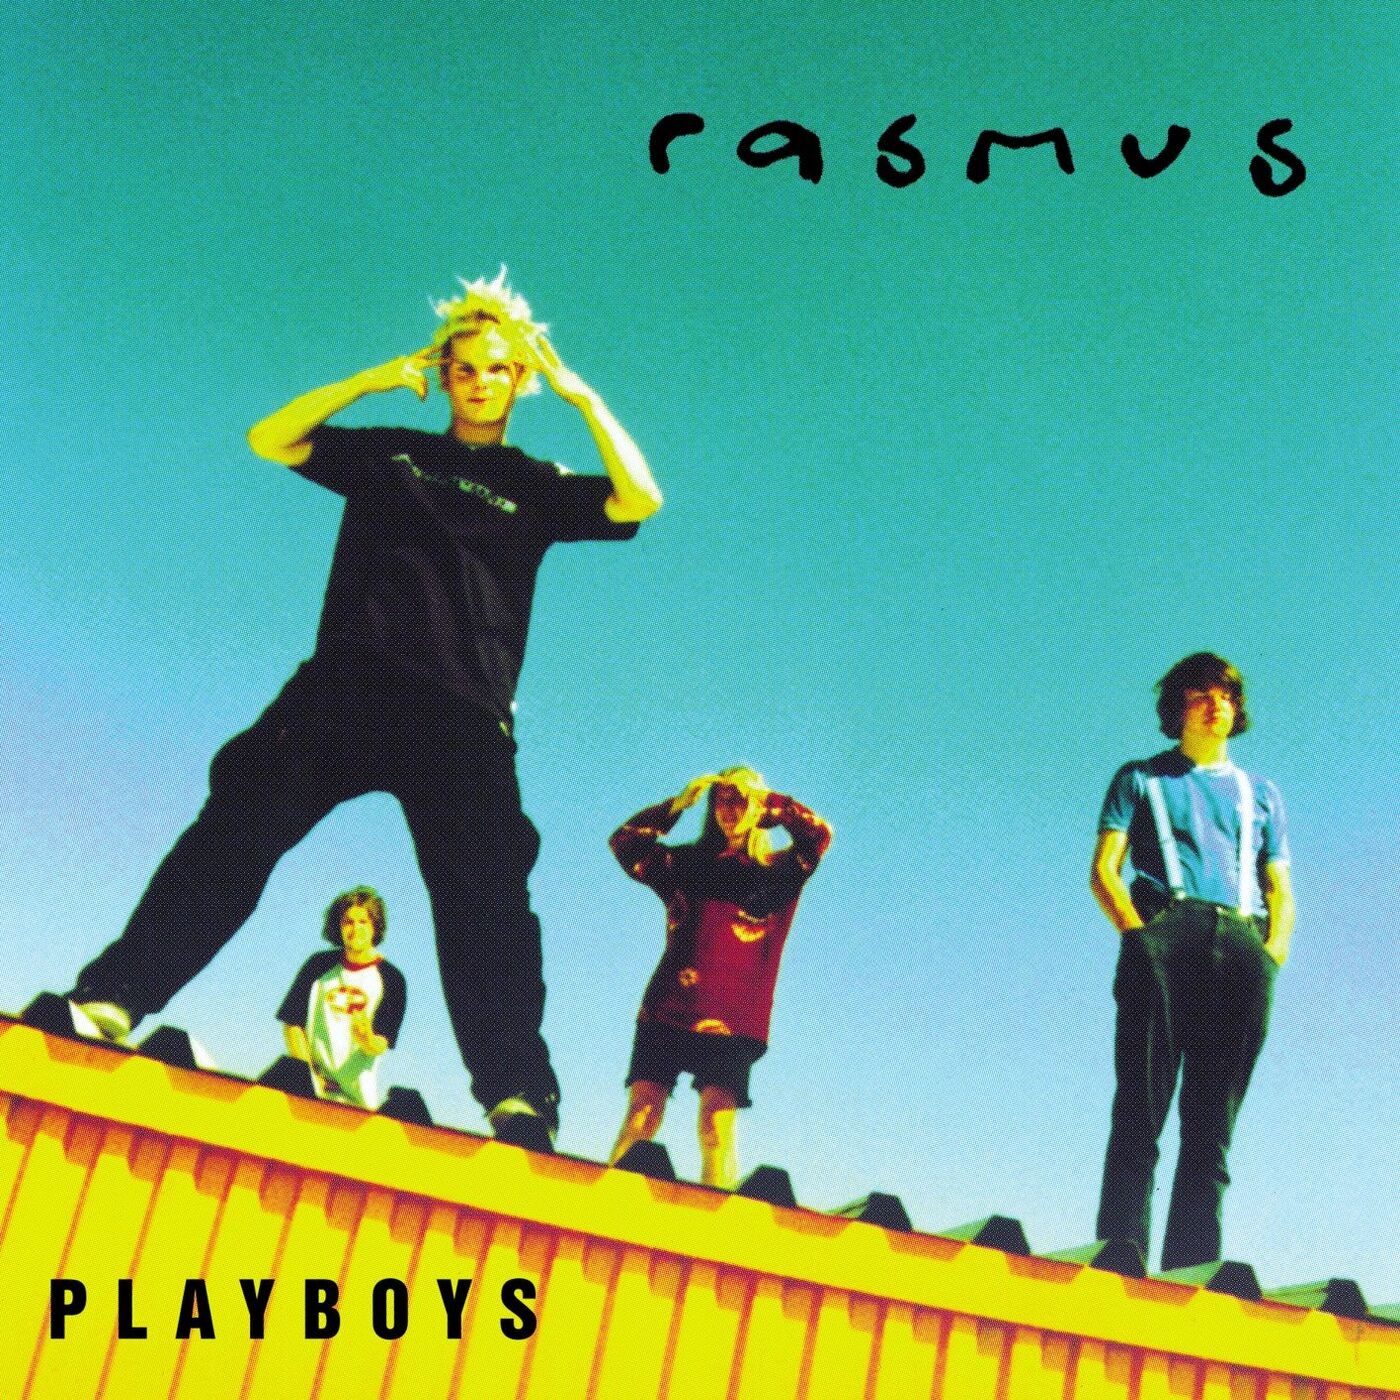 Rise - Album by The Rasmus